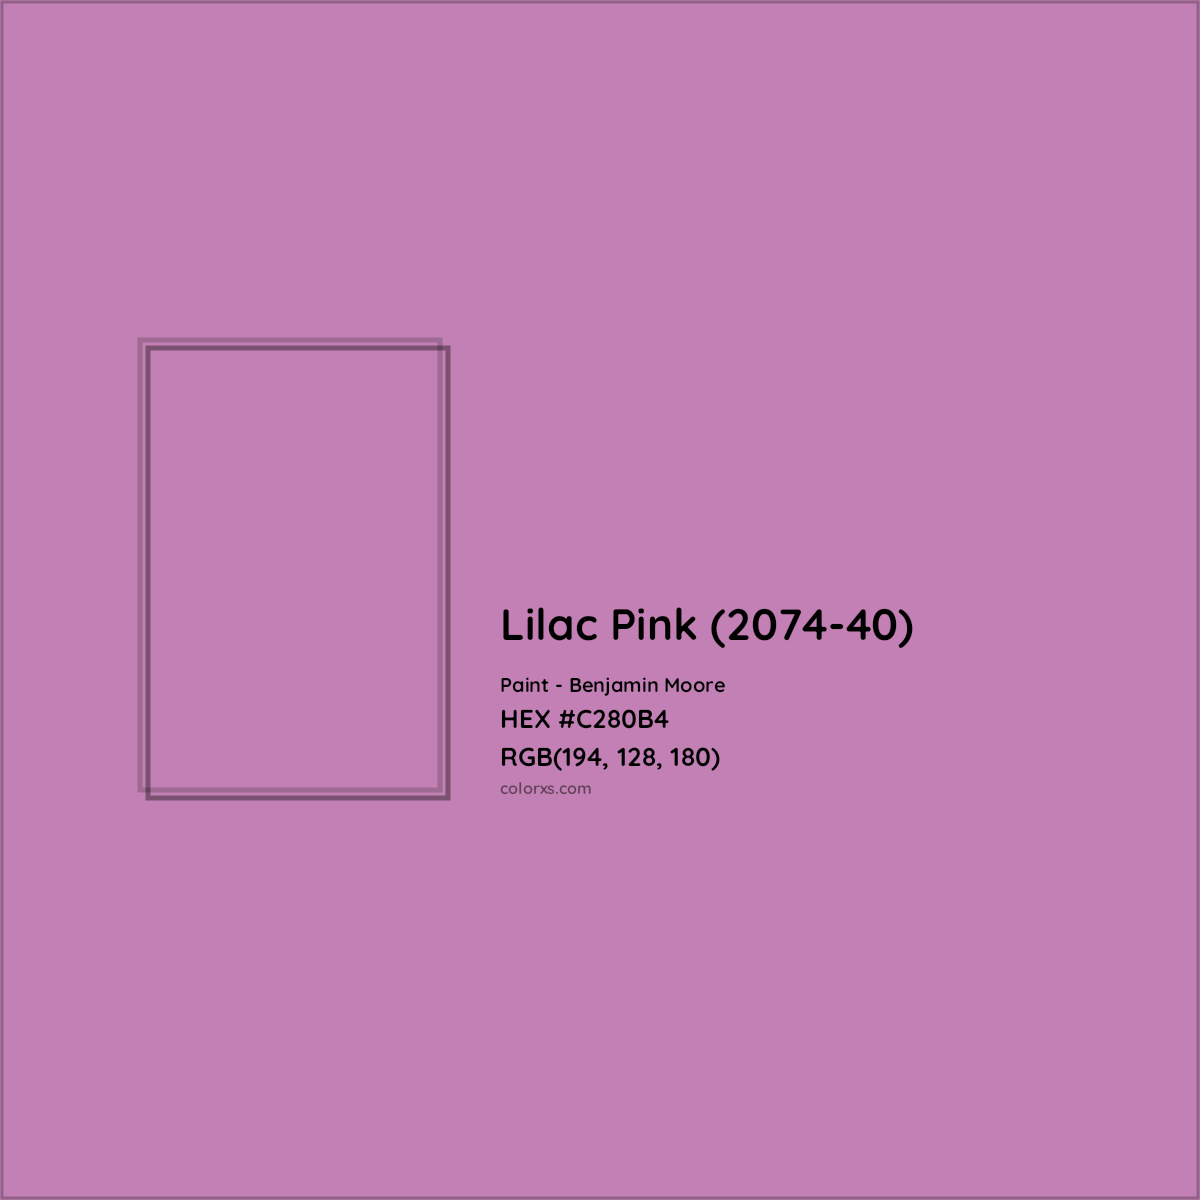 HEX #C280B4 Lilac Pink (2074-40) Paint Benjamin Moore - Color Code